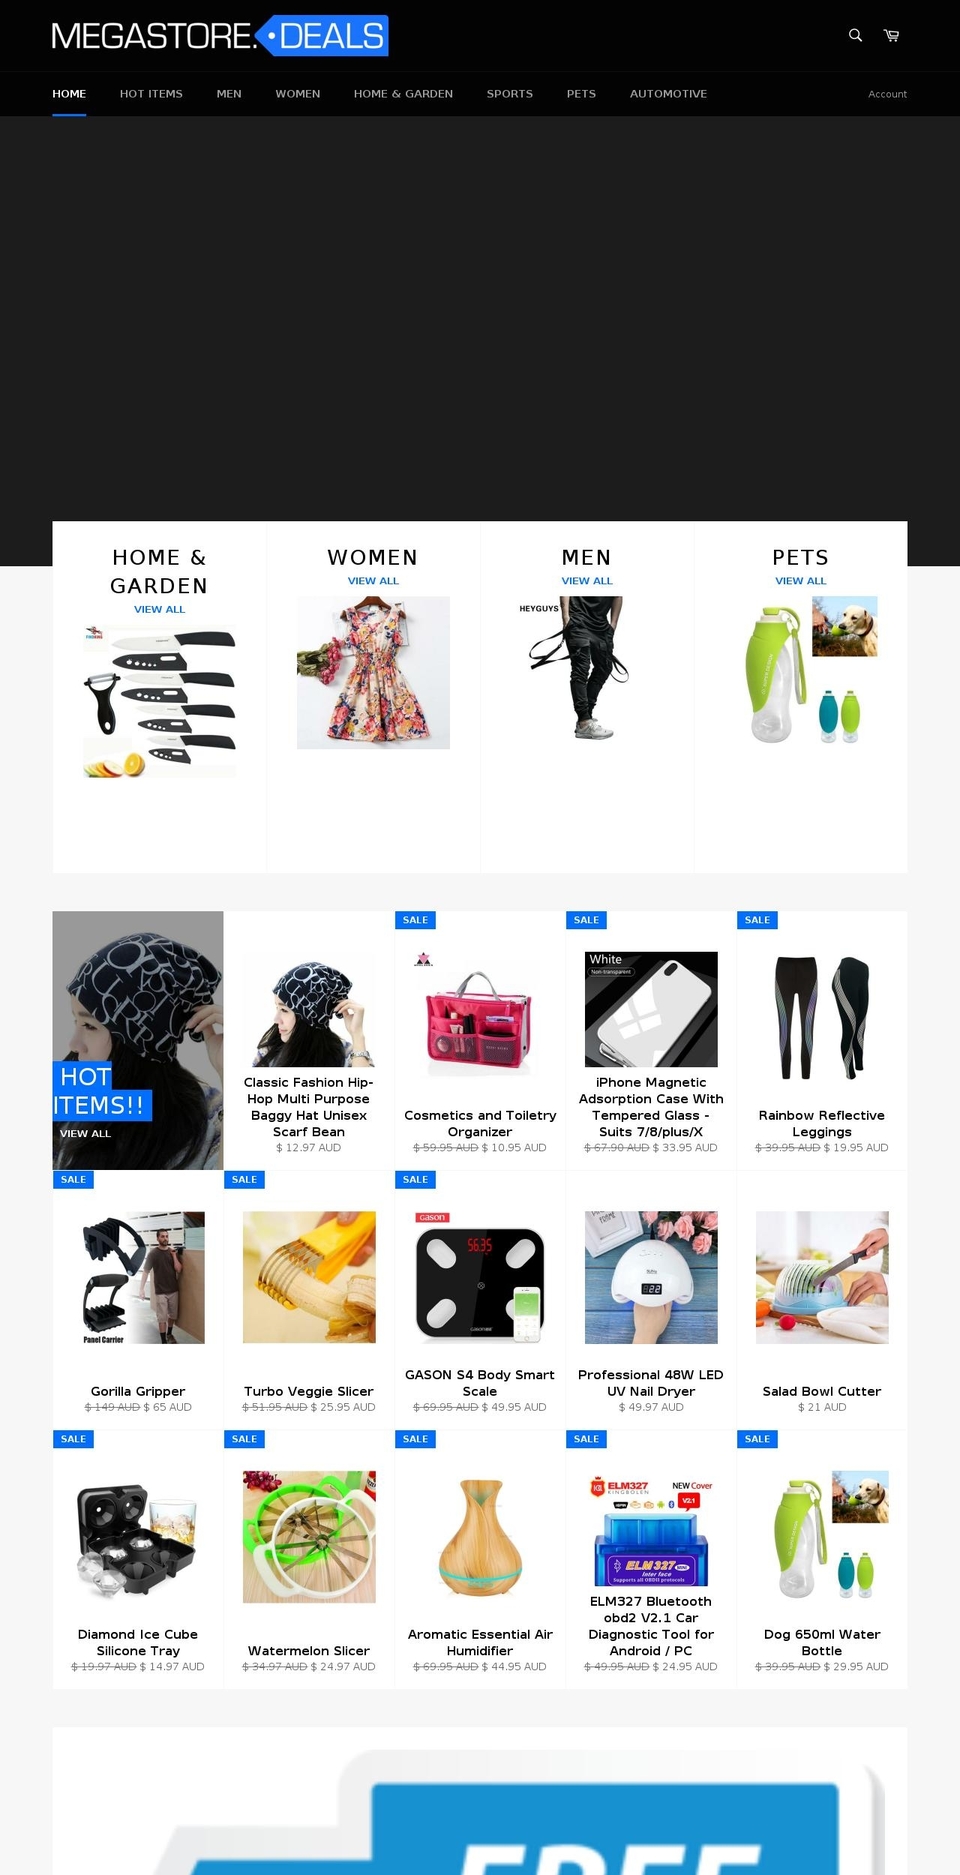 megastore.deals shopify website screenshot